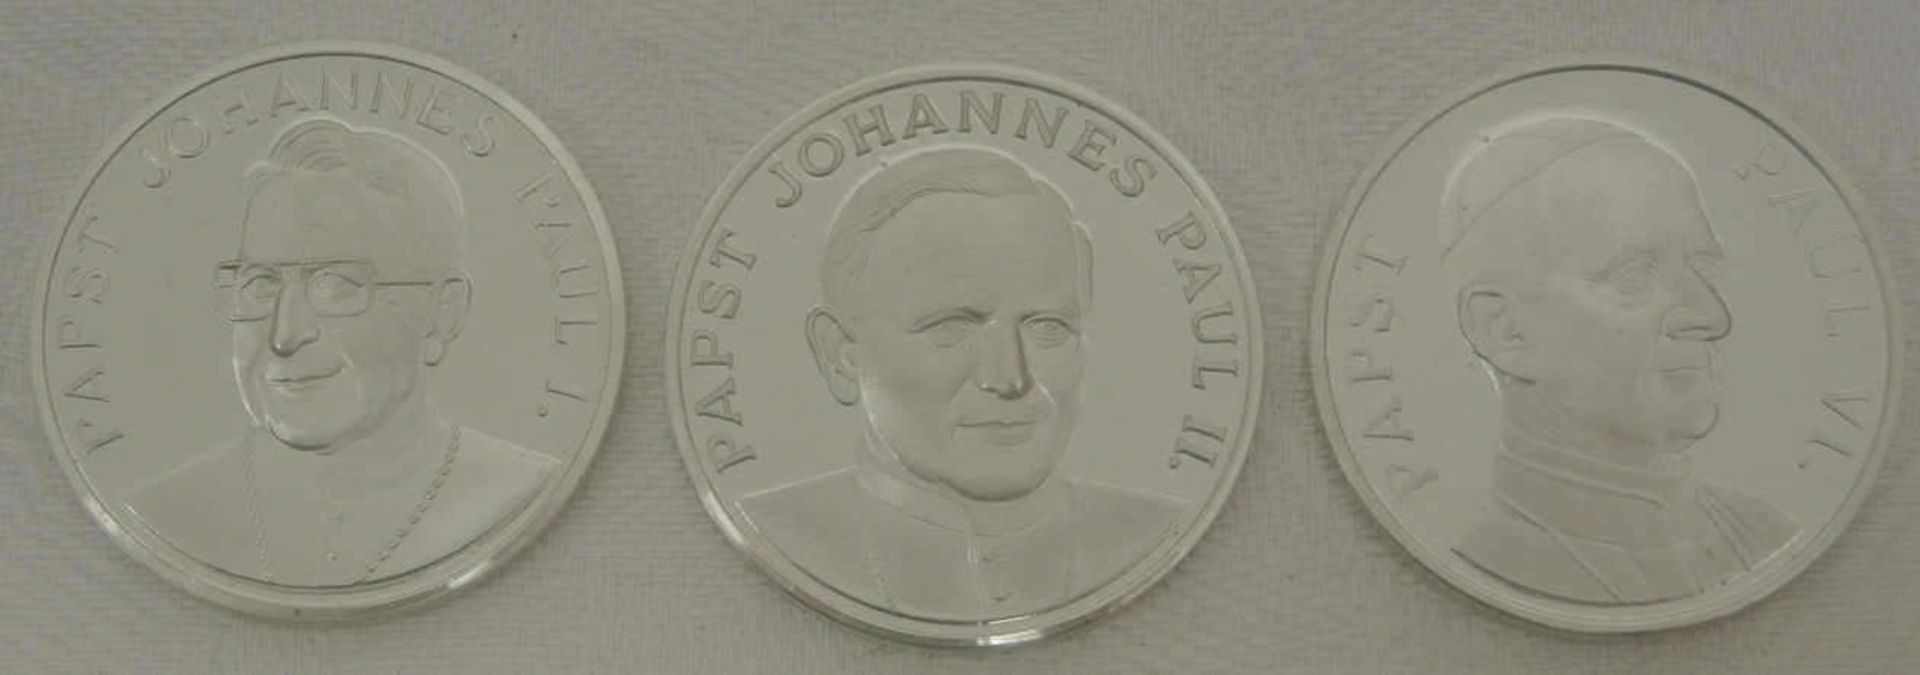 3 kleine Silbermedaillen Vatikan, Paul I, Paul II, Paul VI. Alle Silber gepunzt - Bild 2 aus 2